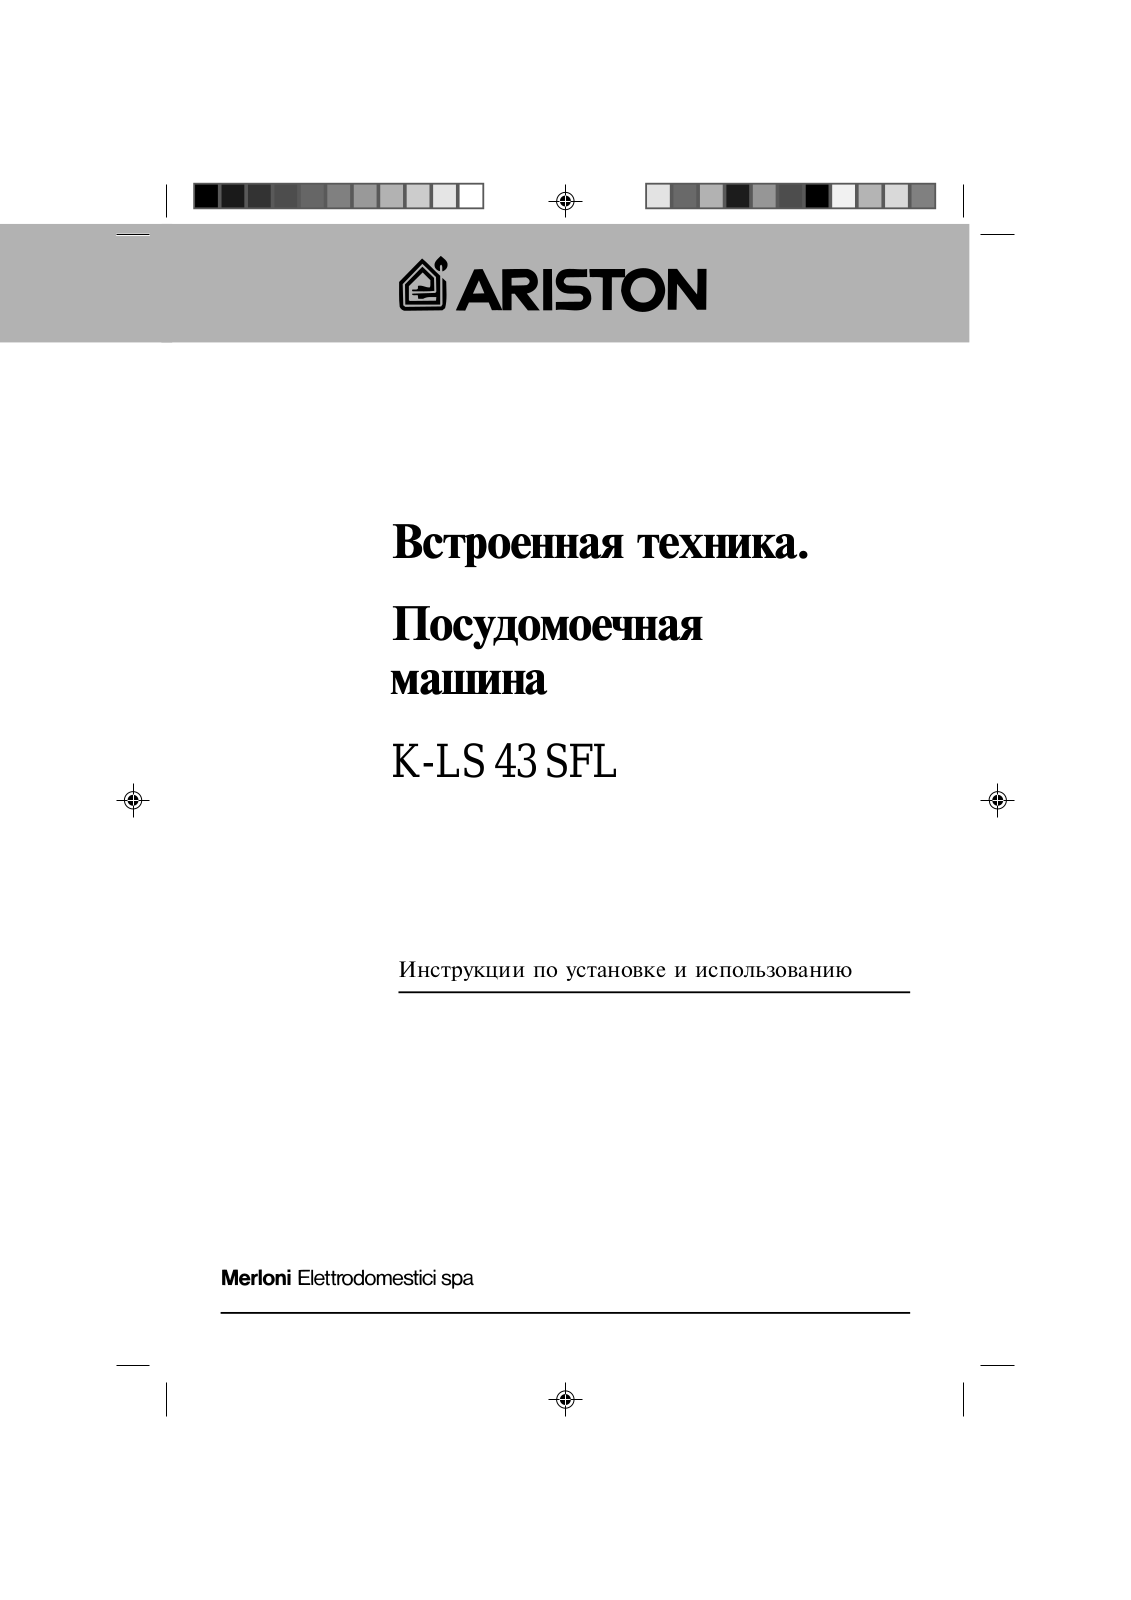 ARISTON K-LS 43 SFL User Manual